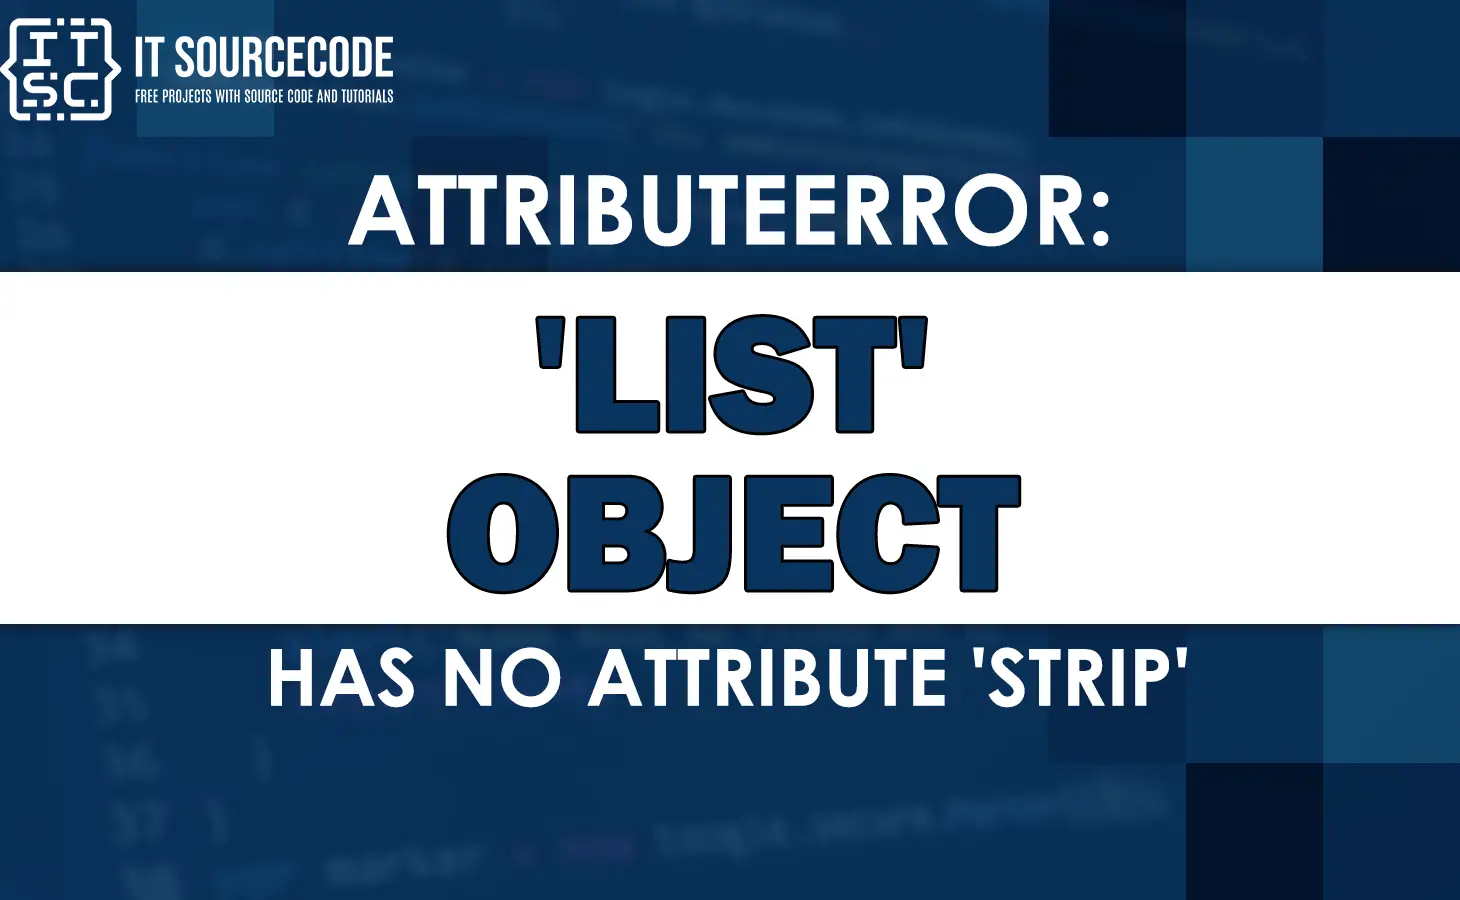 Attributeerror: 'list' object has no attribute 'strip'